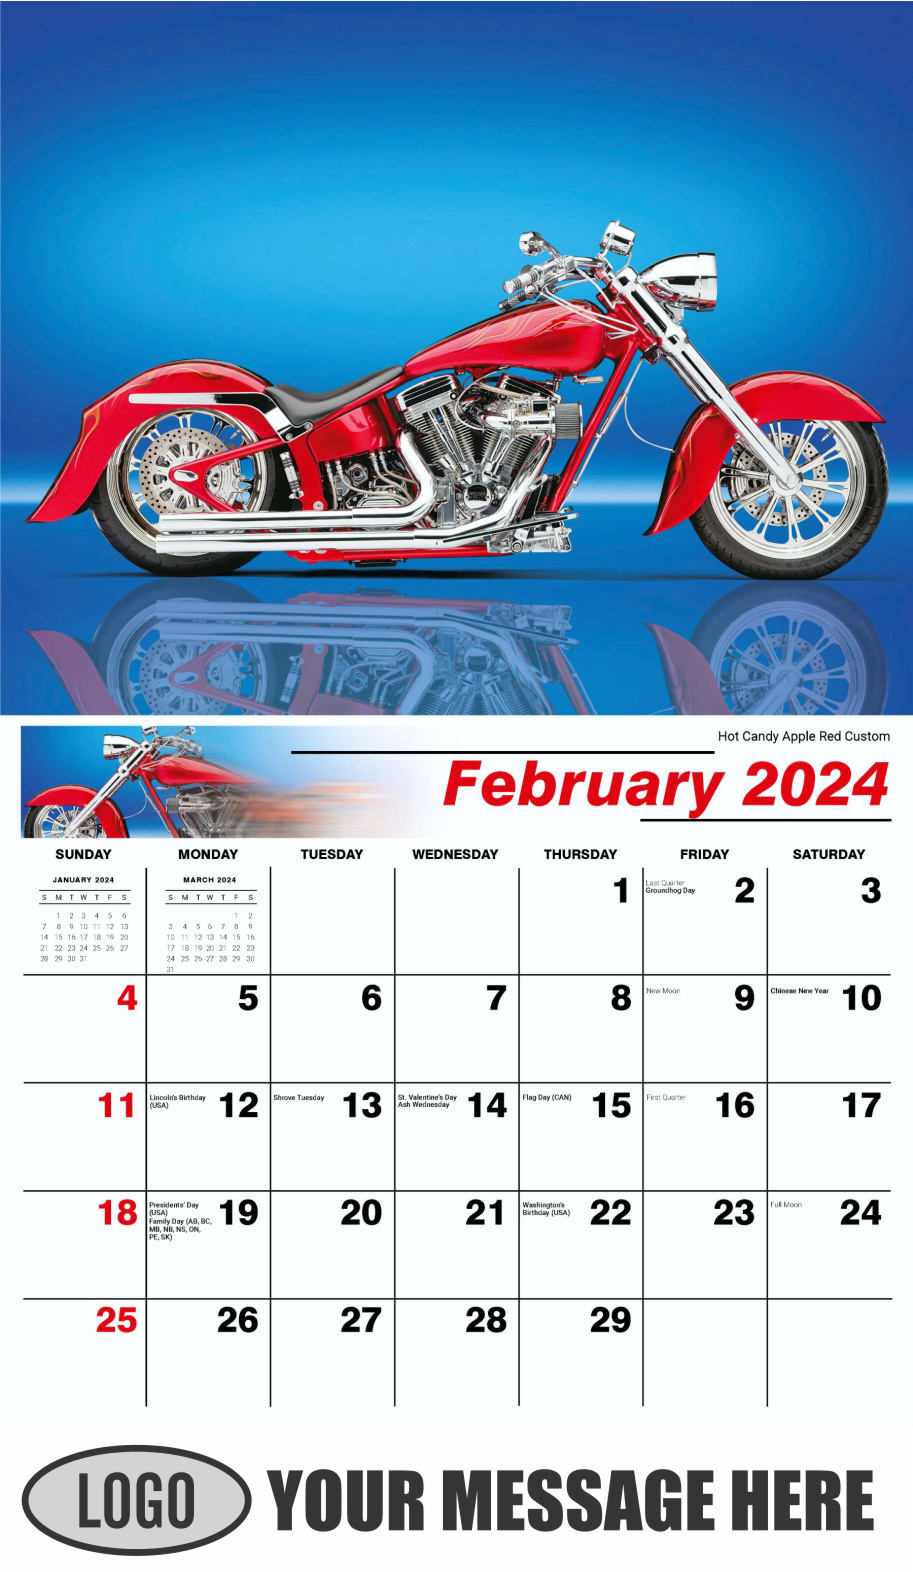 Motorcycle Mania 2024 Automotve Business Advertising Wall Calendar - February